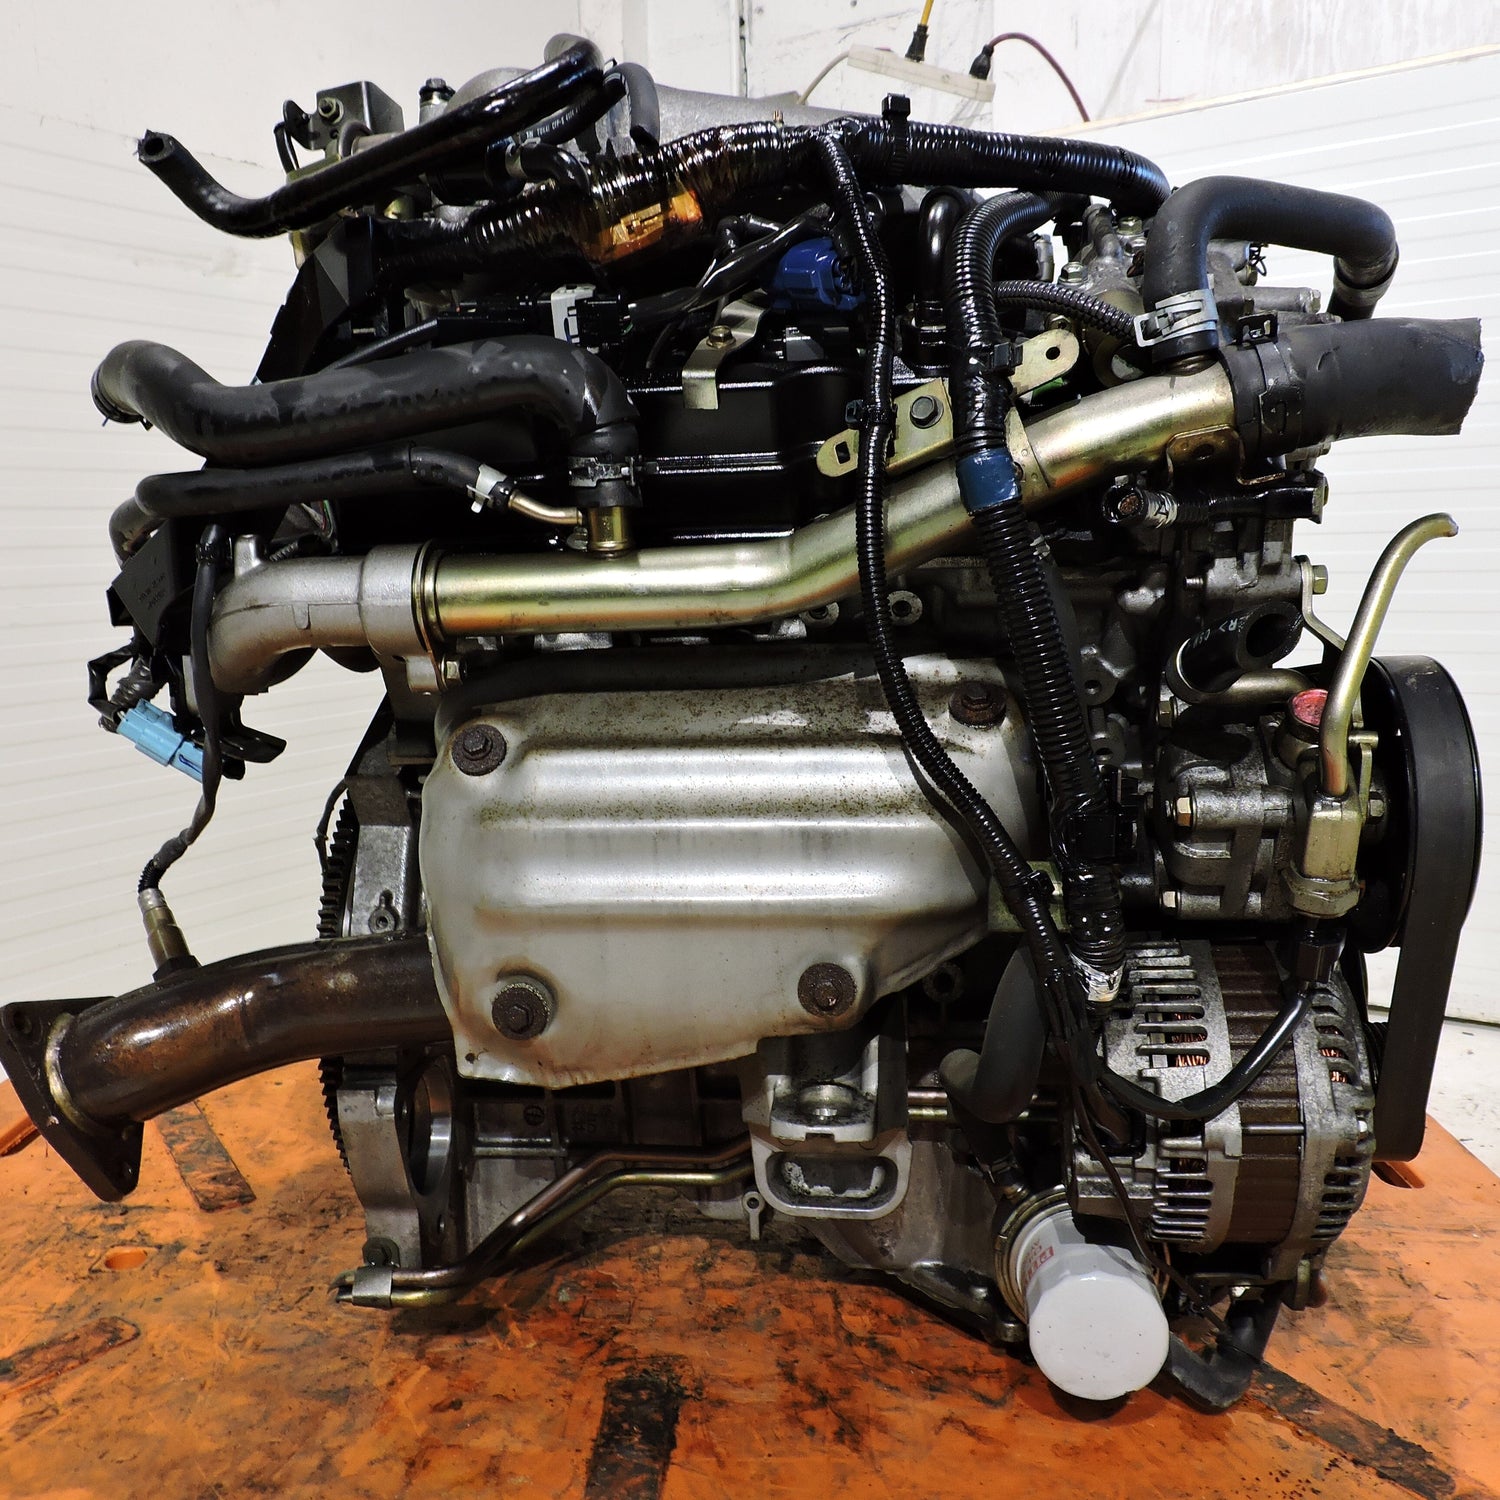 Nissan 350z 2003-2004 3.5L V6 Jdm Engine - VQ35DE